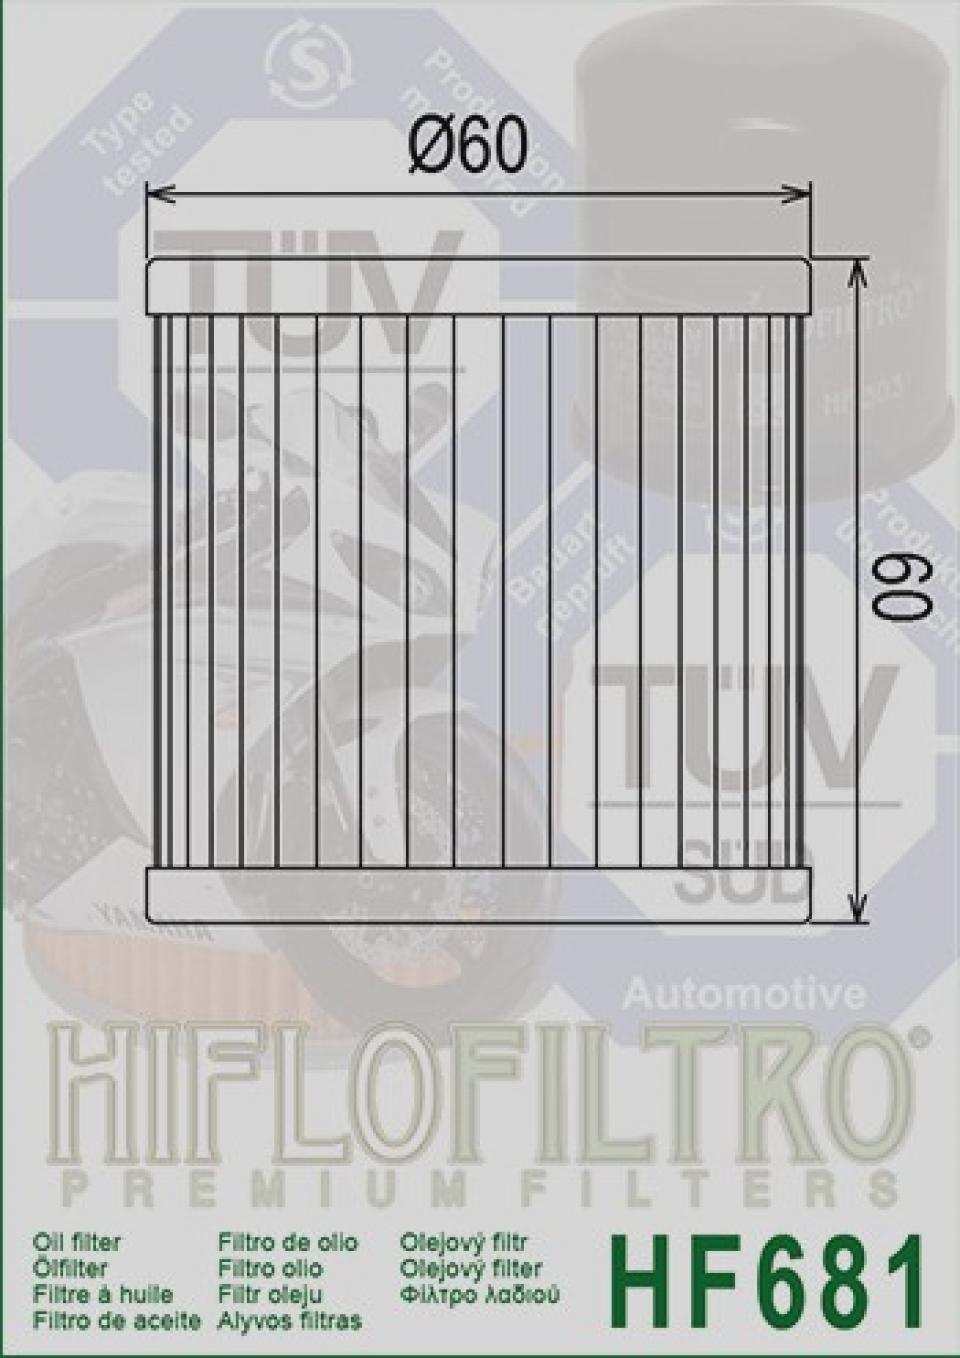 Filtre à huile Hiflofiltro pour Auto HF681 / 16510HN9101HAS Neuf